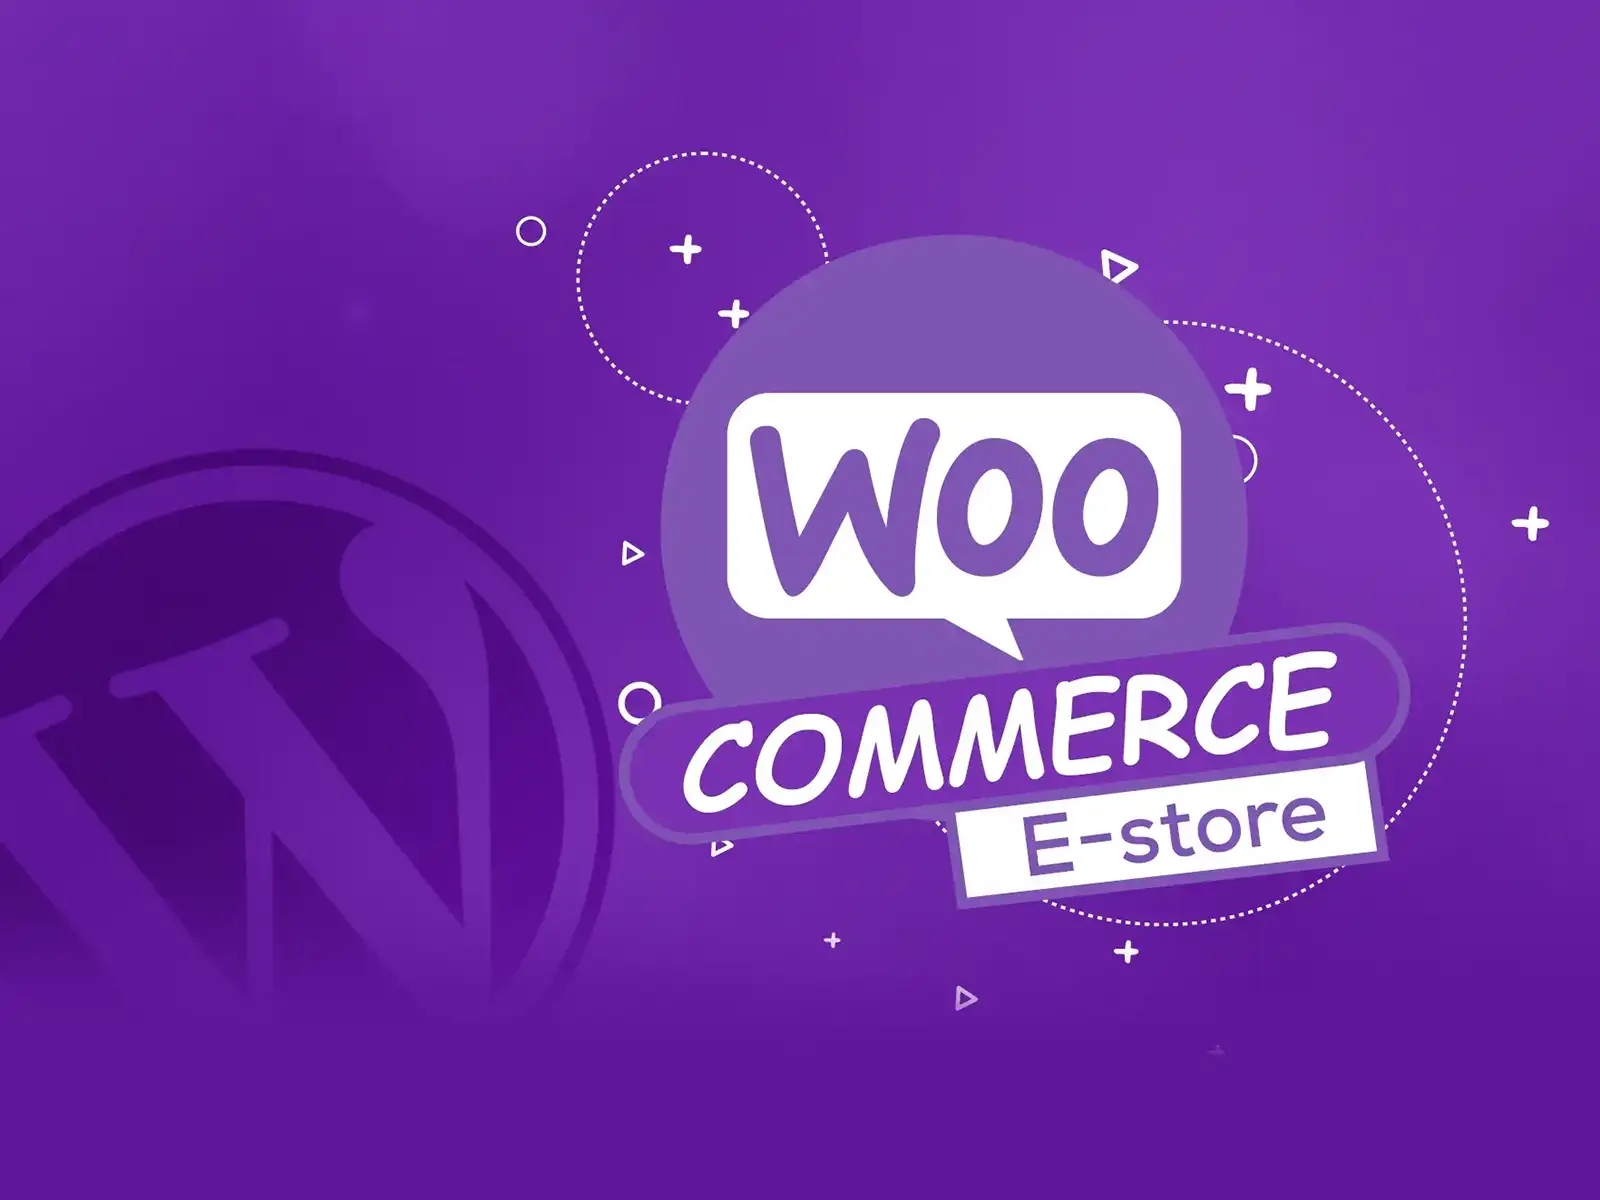 WordPress WooCommerce E-Store Management Course in Bangla